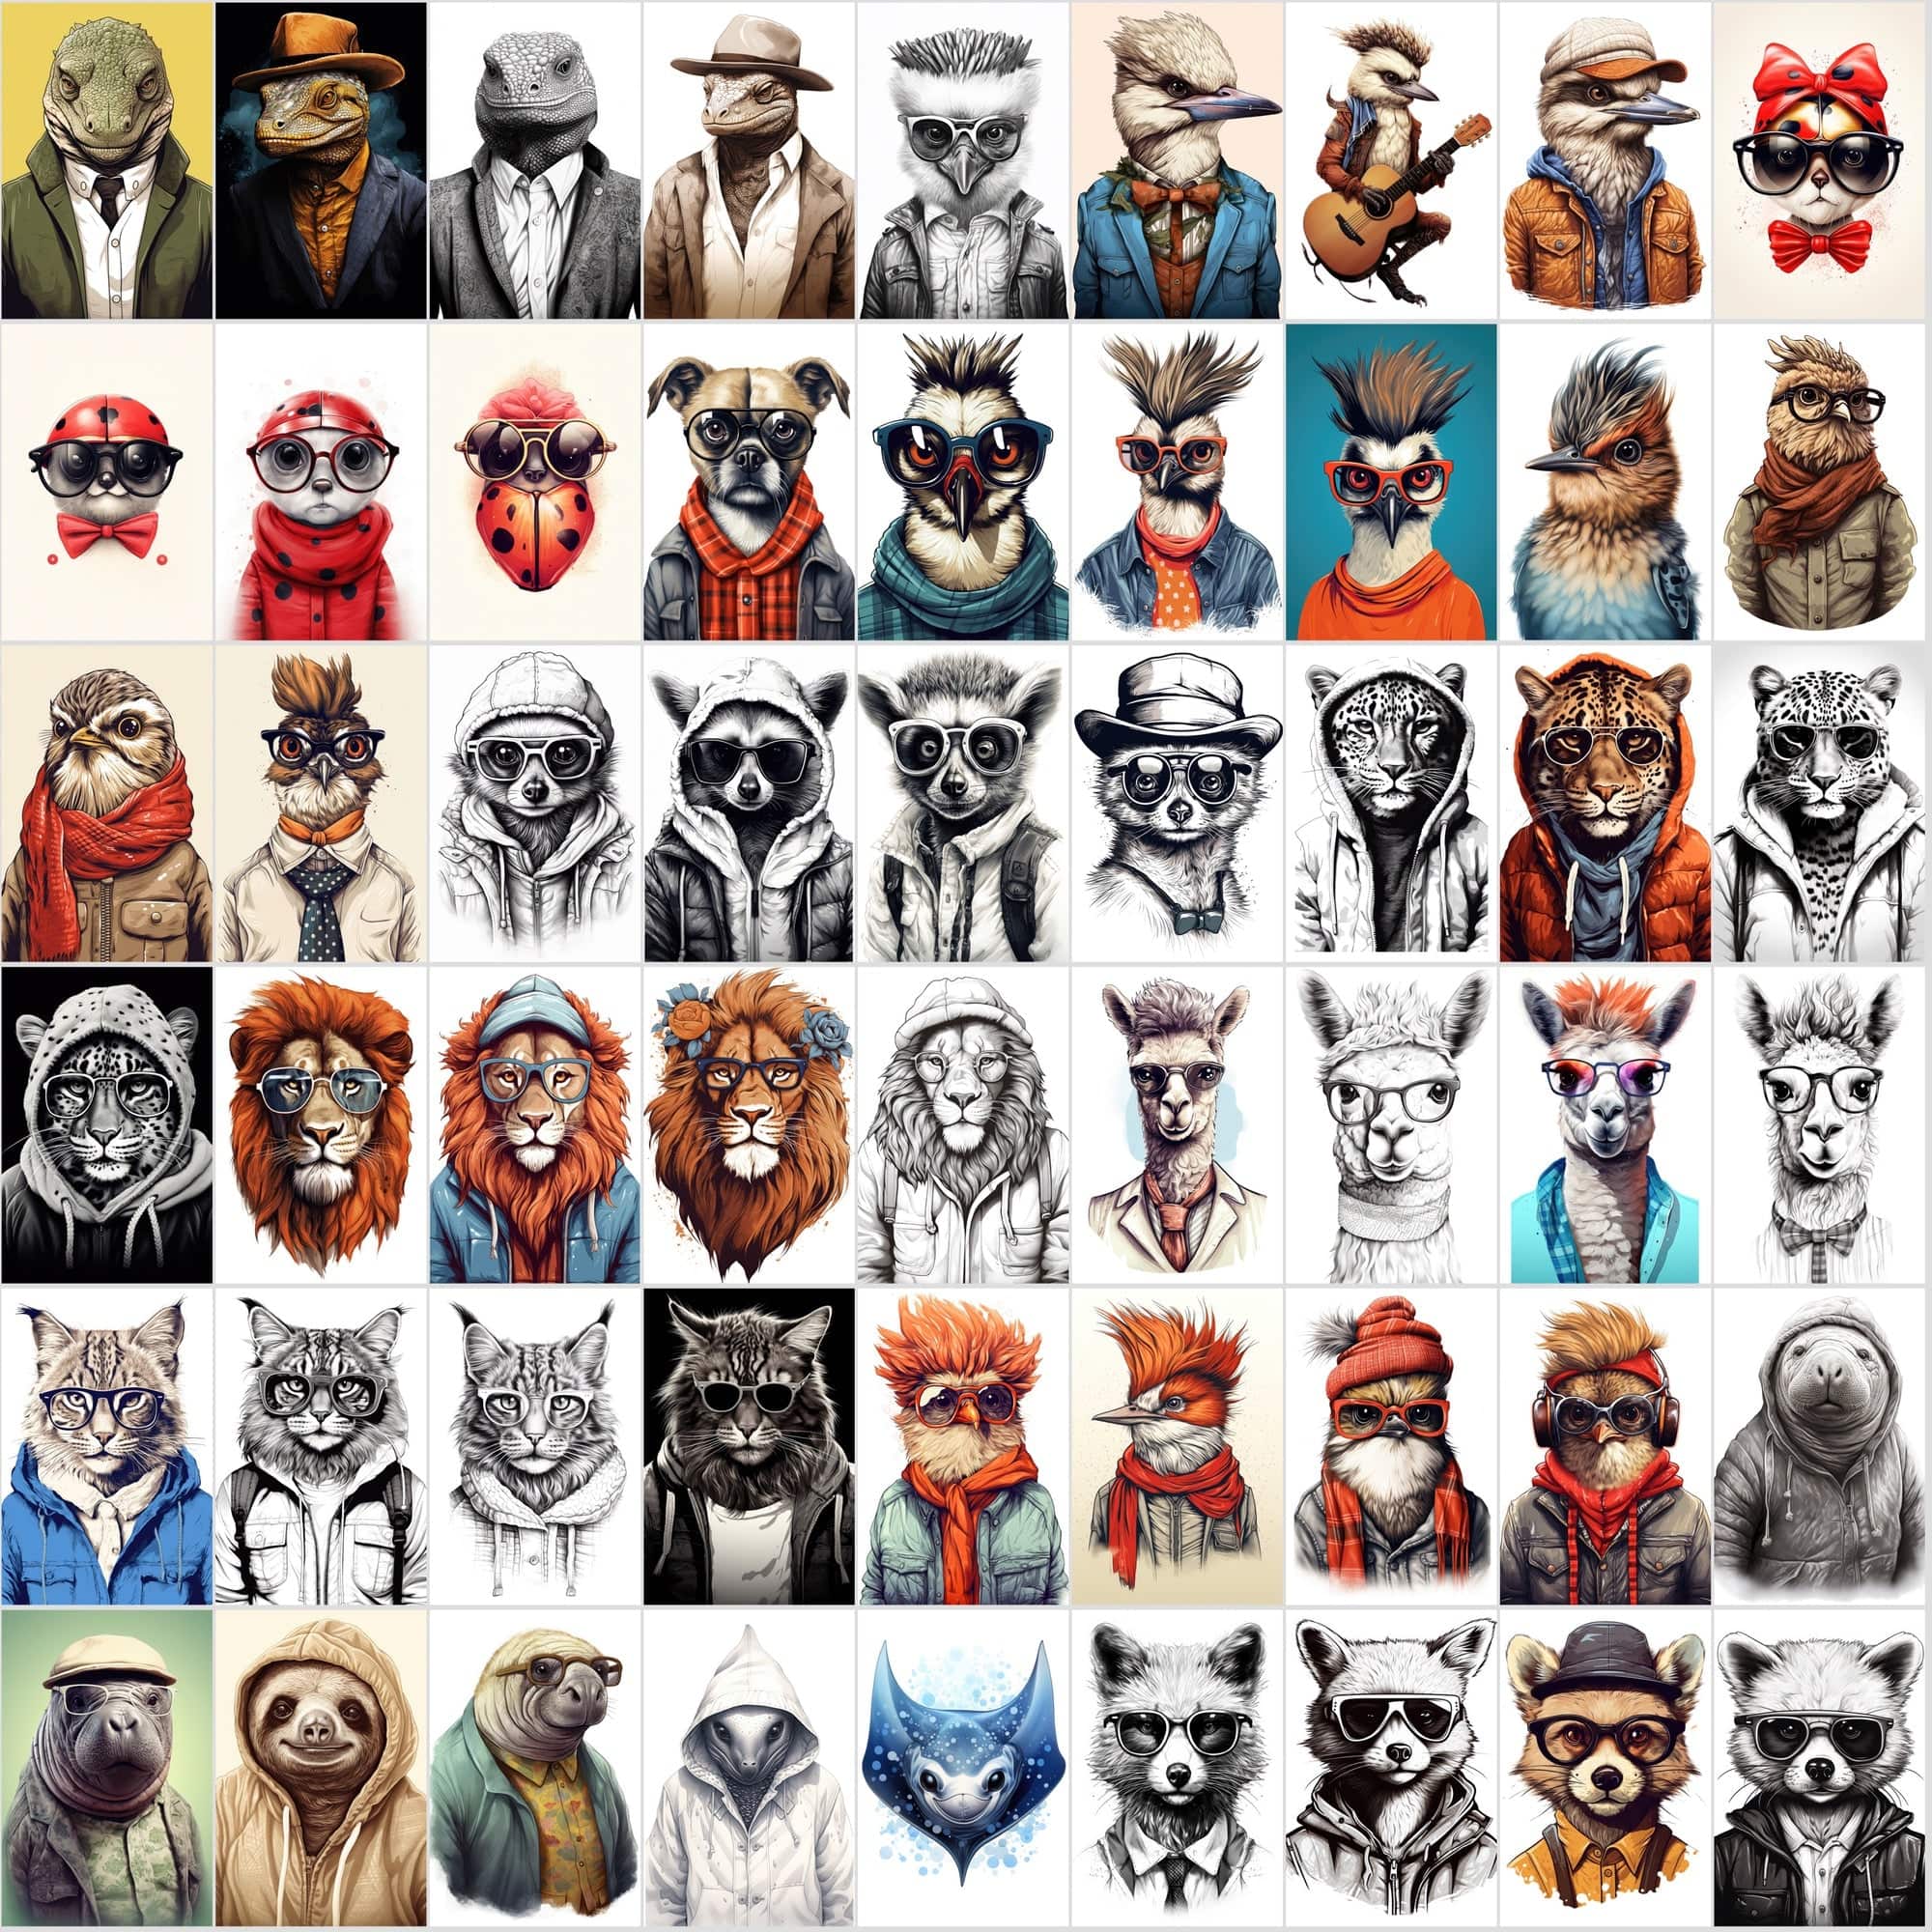 800 Hipster Animal Illustrations: Commercial License, High-Res PNG Files, Stylish Wildlife Portraits Digital Download Sumobundle